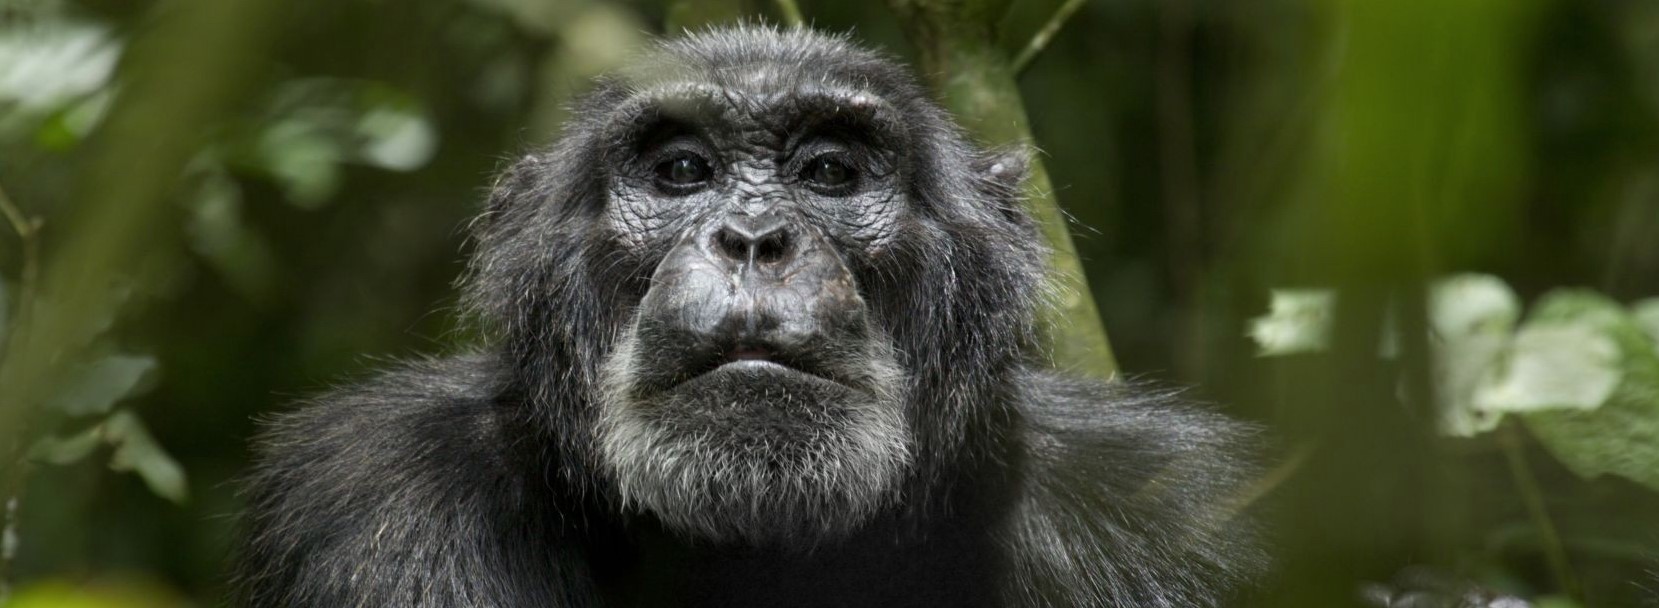 Category: Gorilla trekking in Virunga